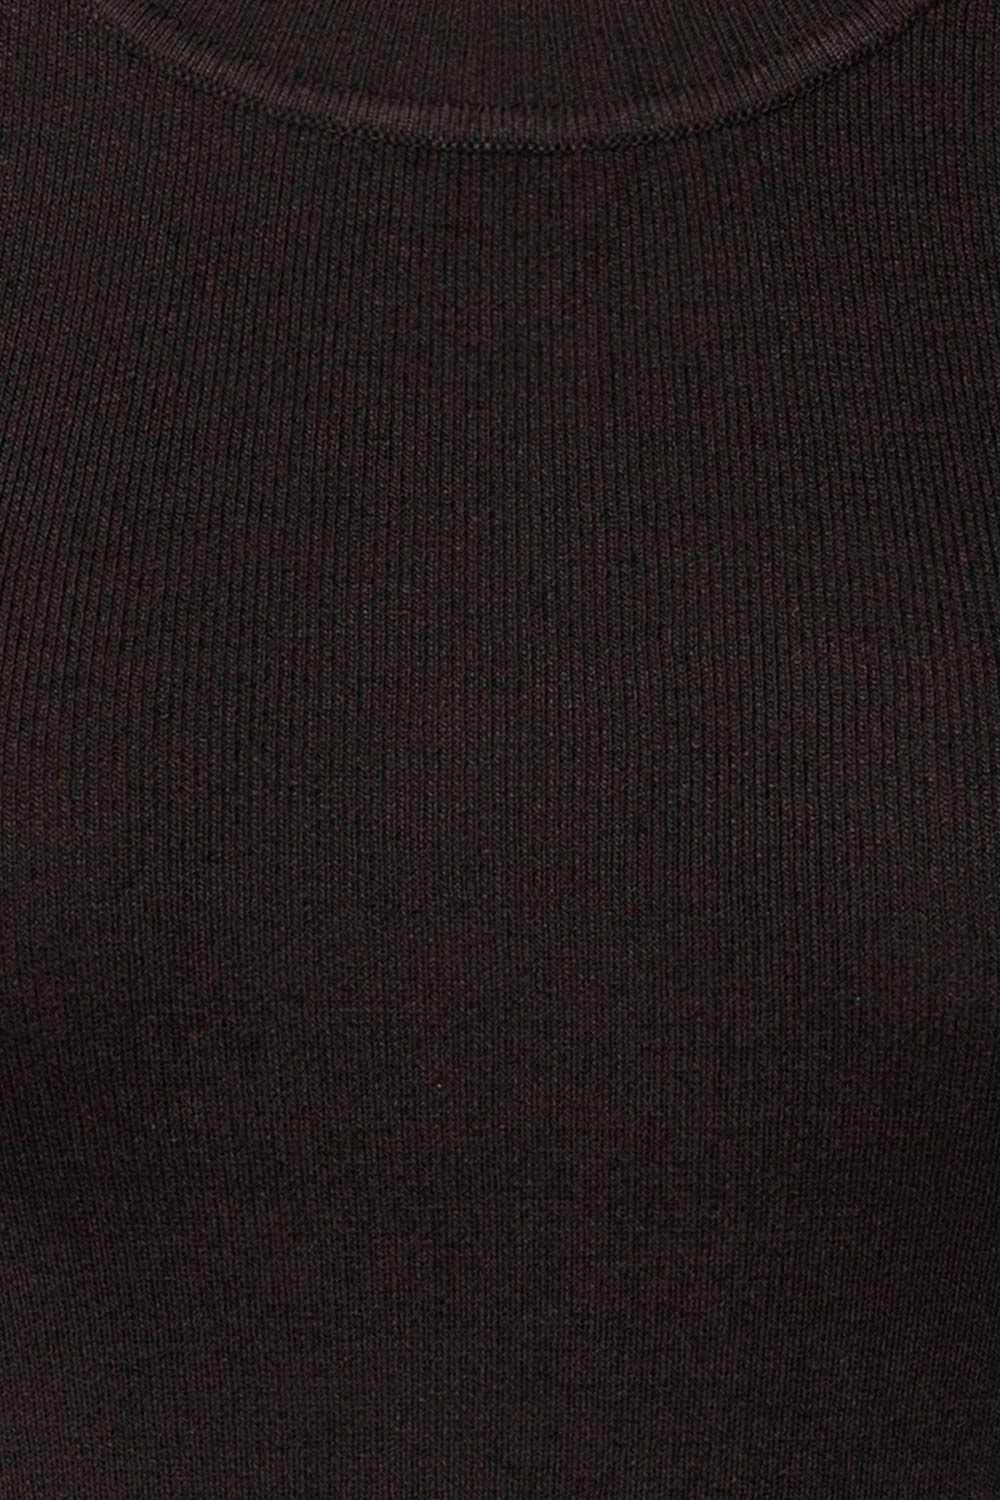 Altrincham Black Halter Neck Knit Top | La petite garçonne fabric